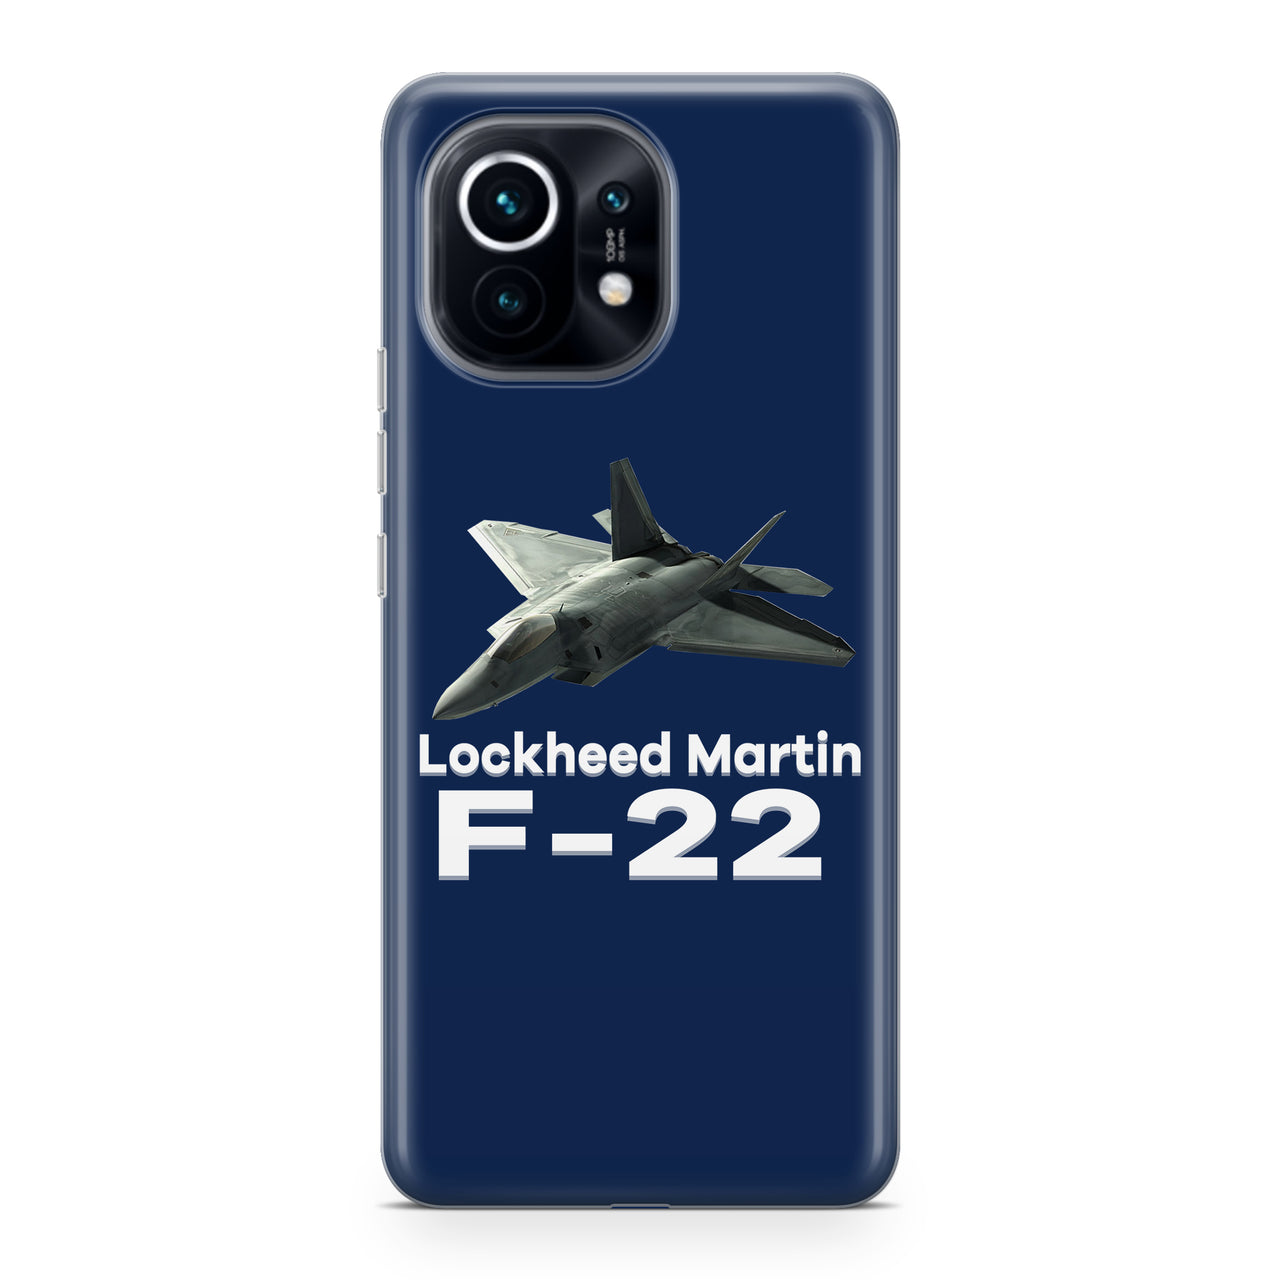 The Lockheed Martin F22 Designed Xiaomi Cases